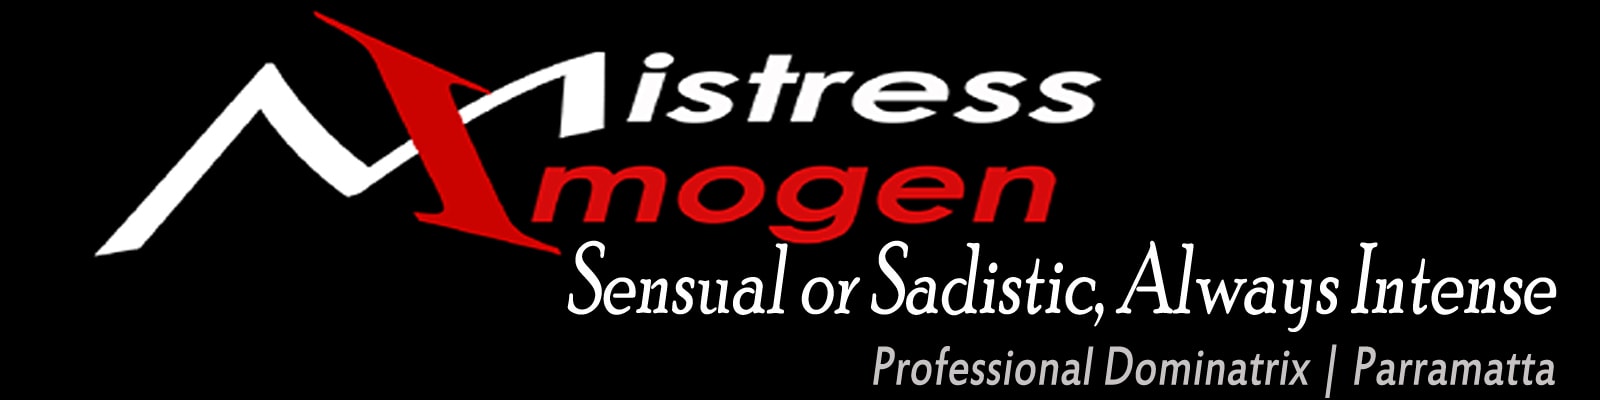 Mistress Imogen | Professional Dominatrix | Parramatta